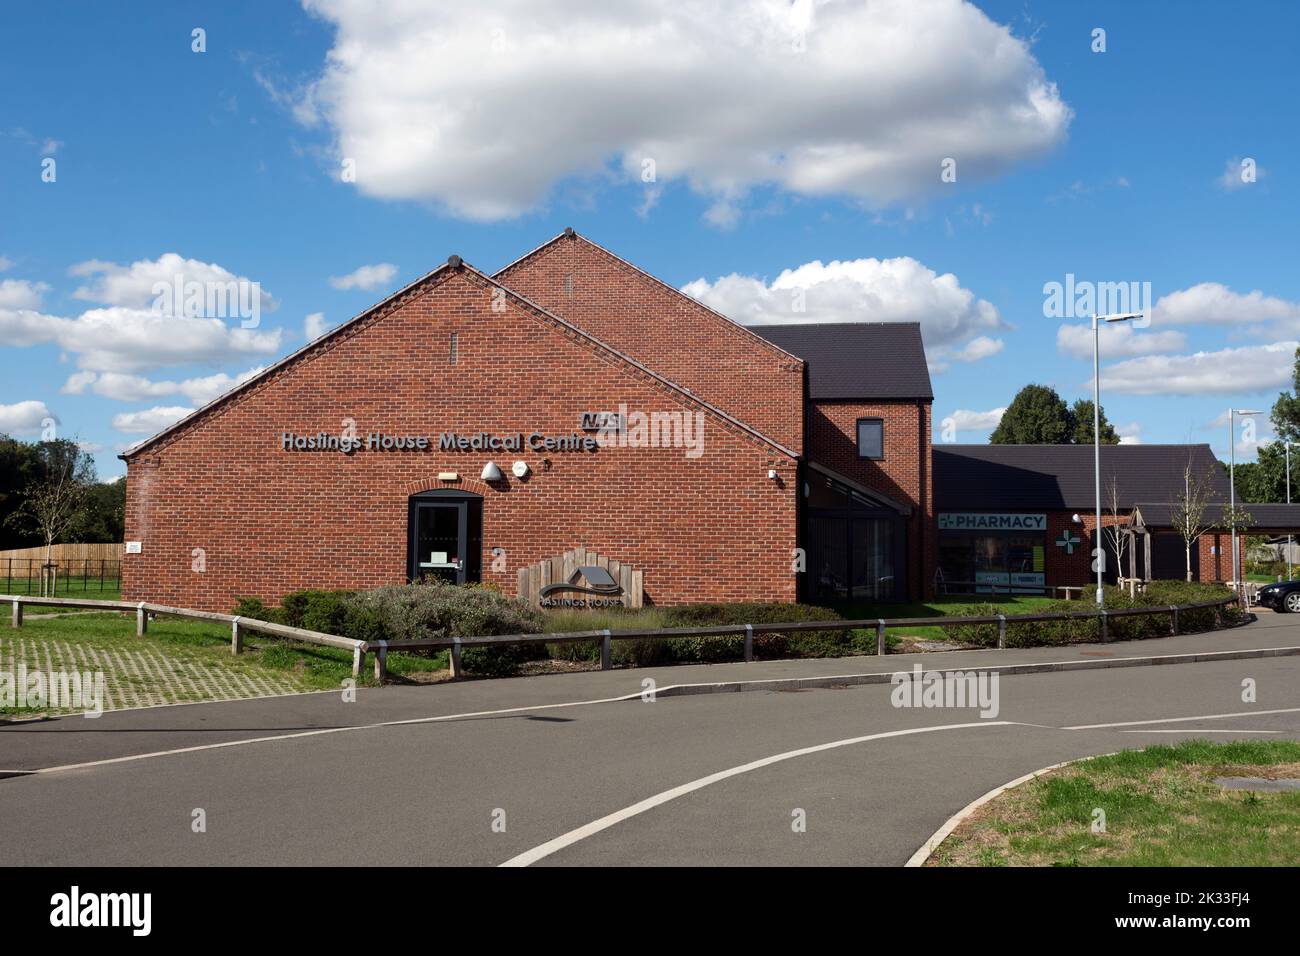 Hastings House Medical Centre, Wellesbourne, Warwickshire, England, UK Stock Photo